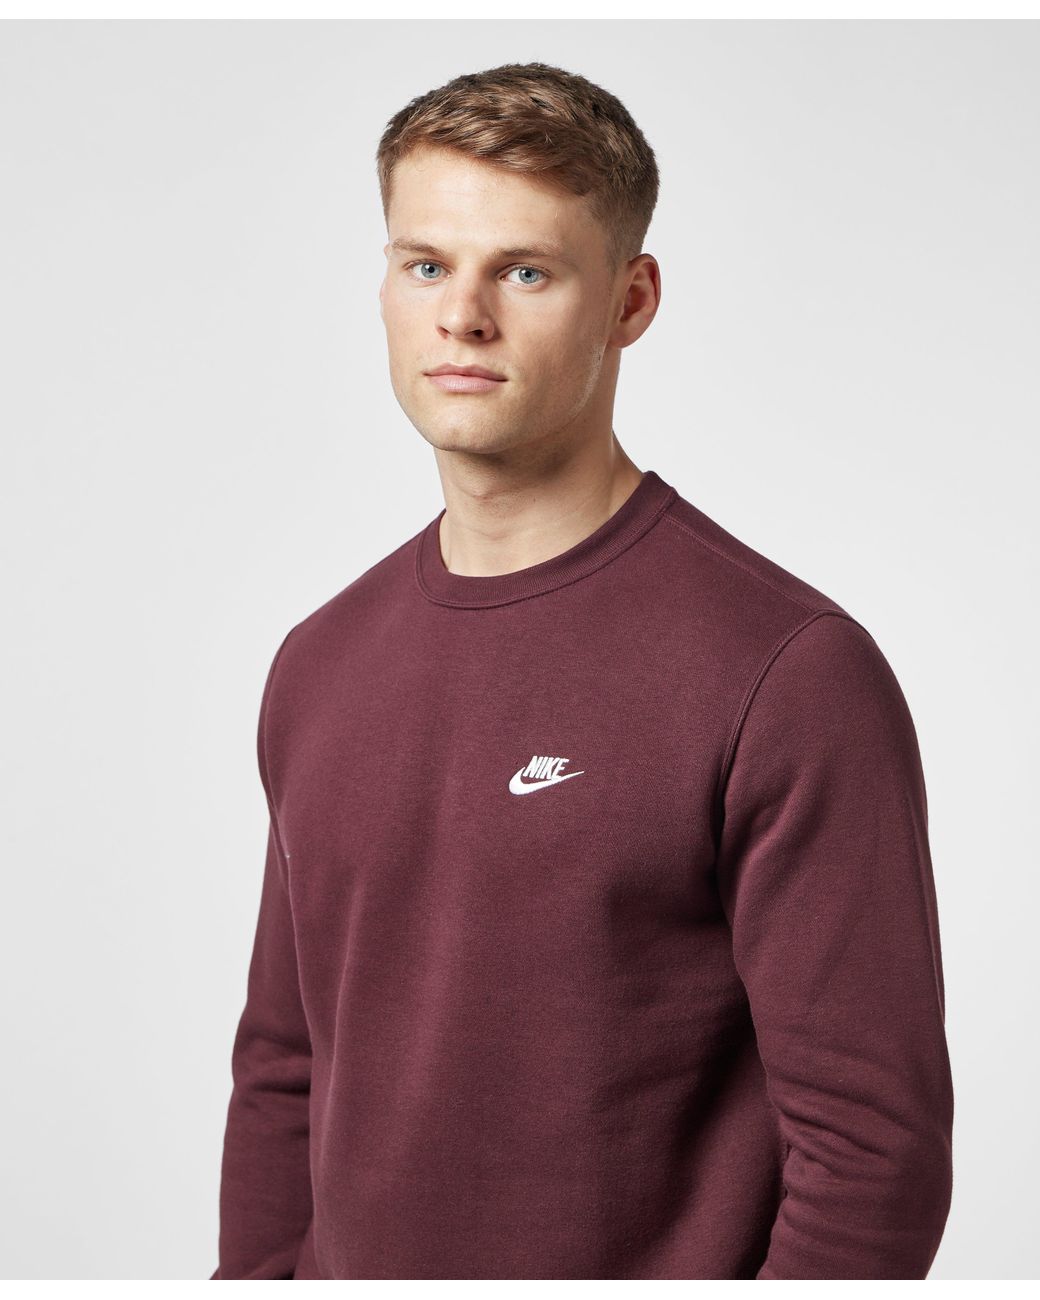 Nike Foundation Crew Sweatshirt in Burgundy (Purple) for Men | Lyst  Australia